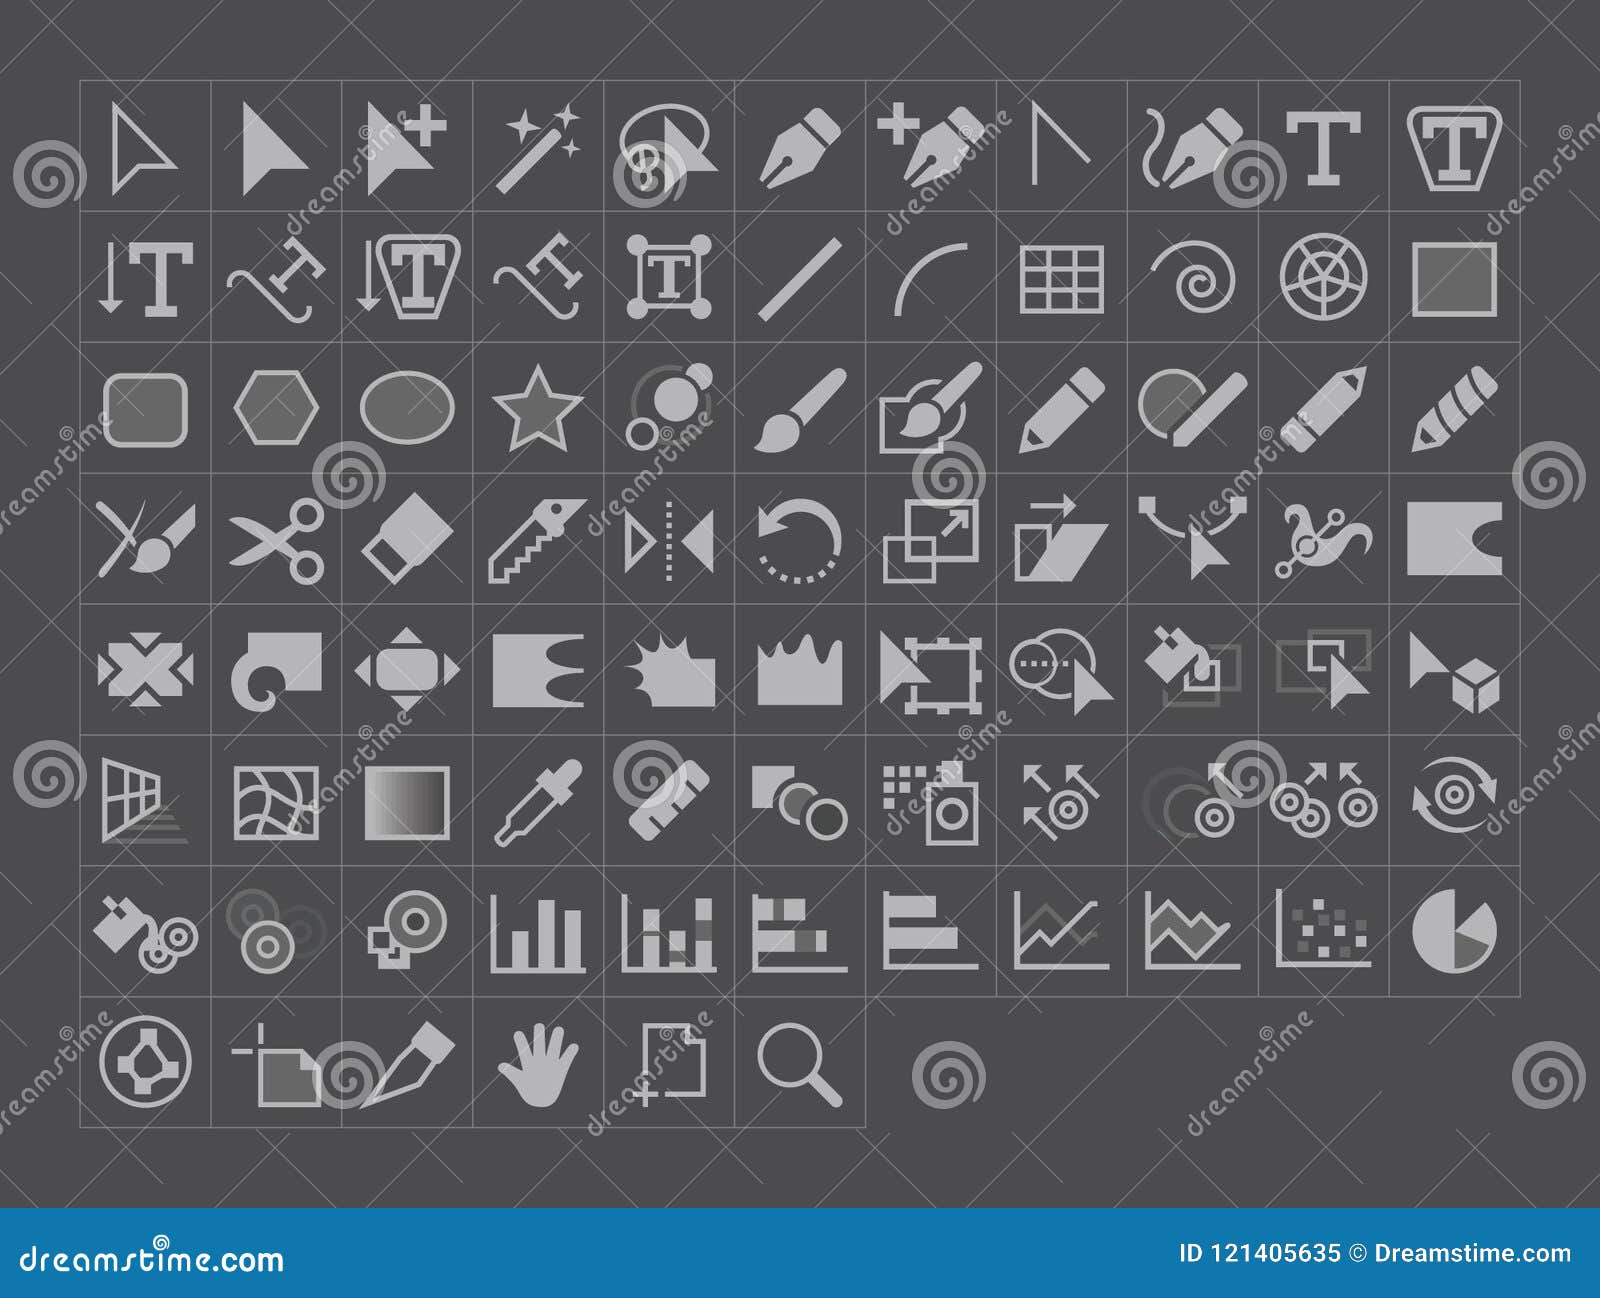   tool icons